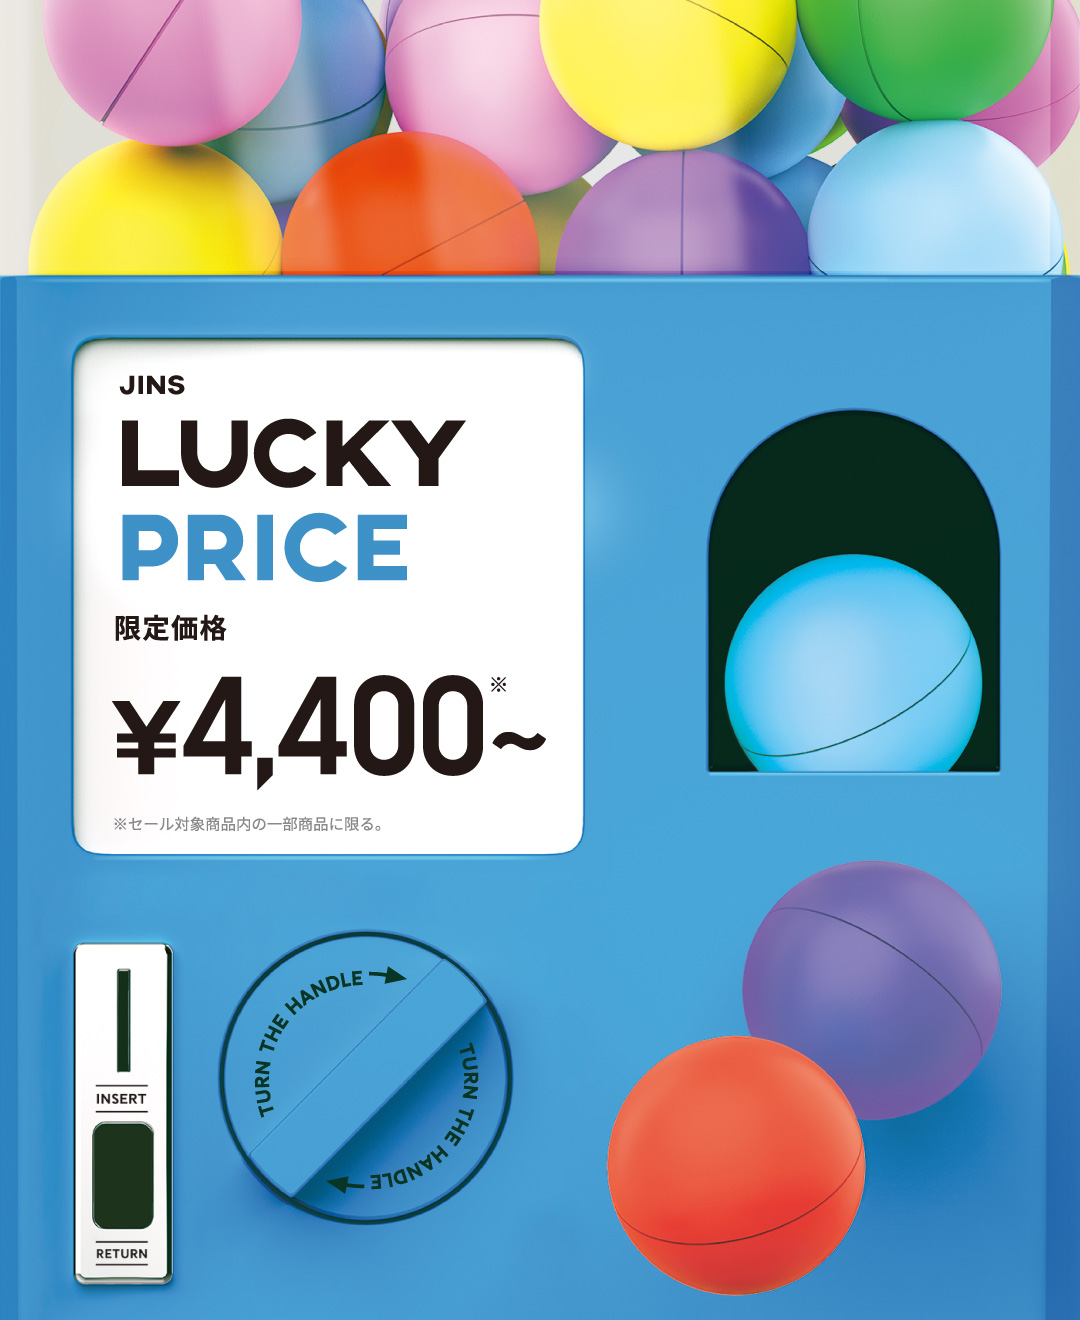 JINS LUCKY PRICE 限定価格¥4,400〜 ※セール対象商品内の一部商品に限る。